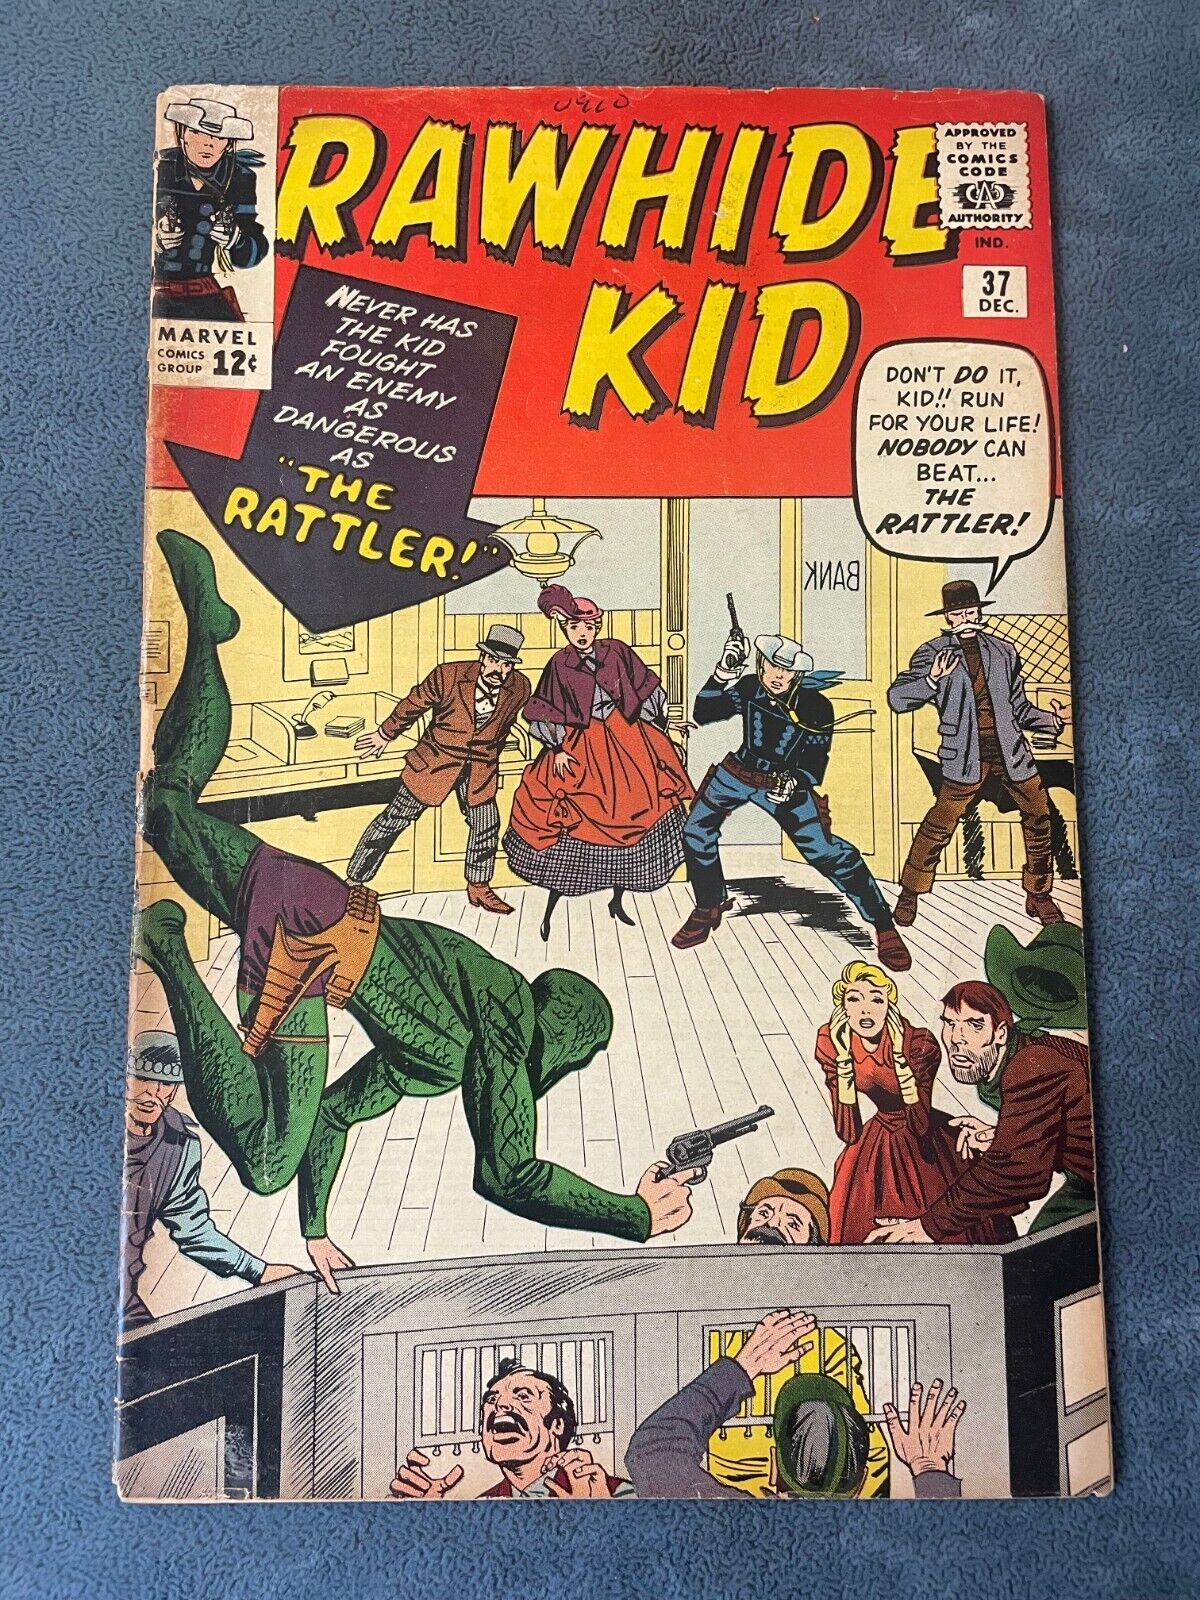 Rawhide Kid #37 1963 Marvel Comic Book Silver Age Western Jack Kirby Detached